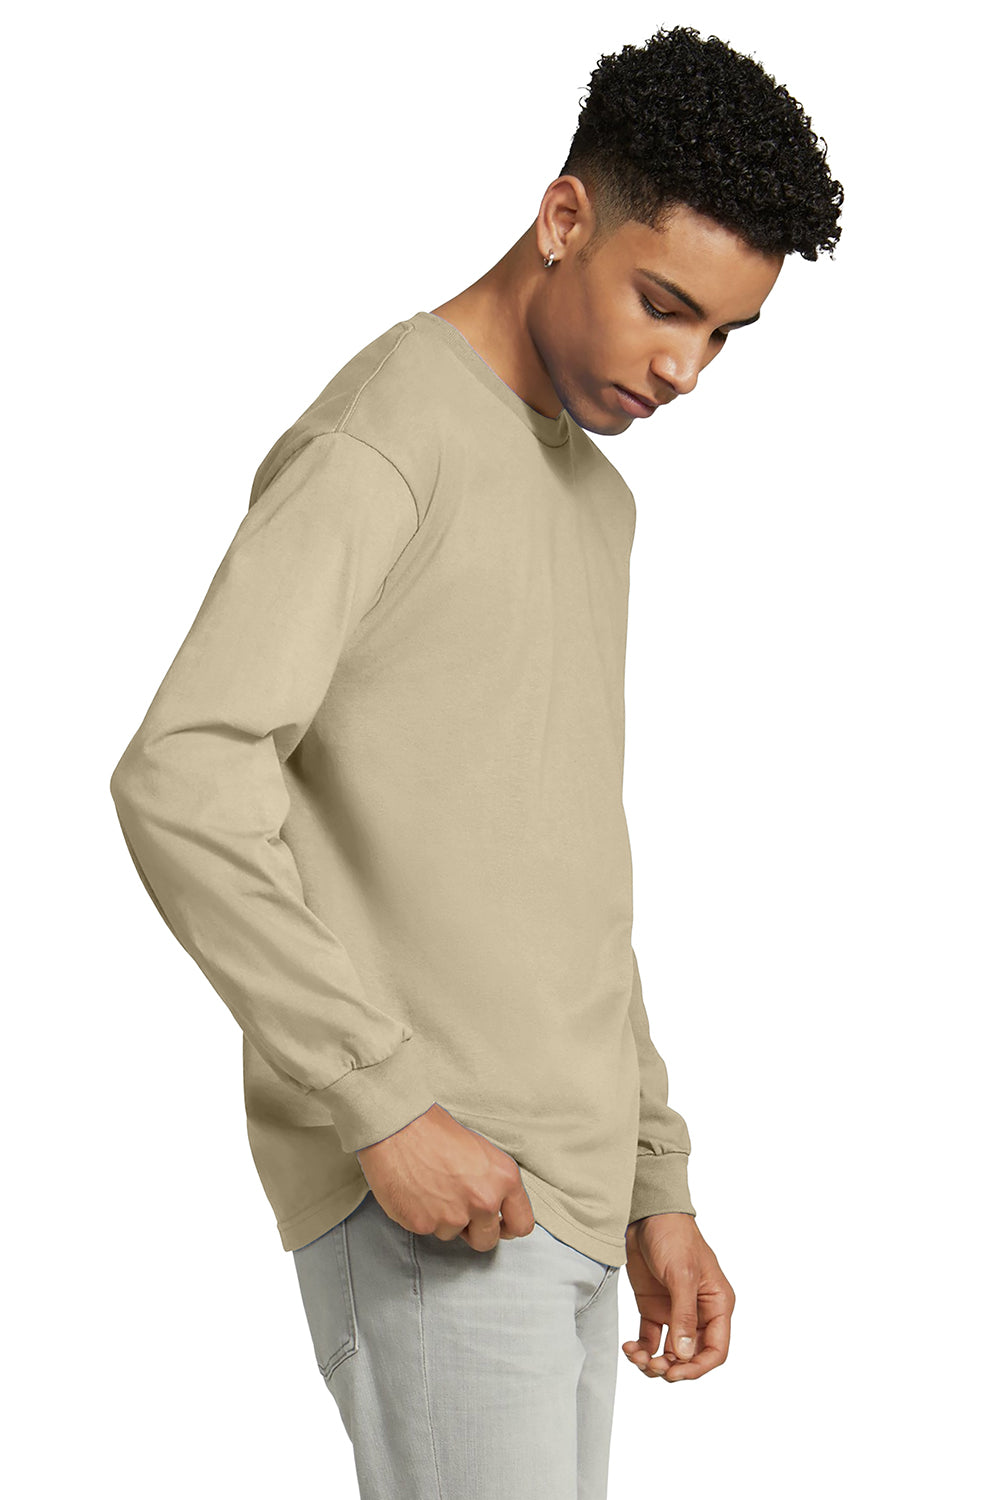 American Apparel AL1304/1304 Mens Long Sleeve Crewneck T-Shirt Sand Model Side